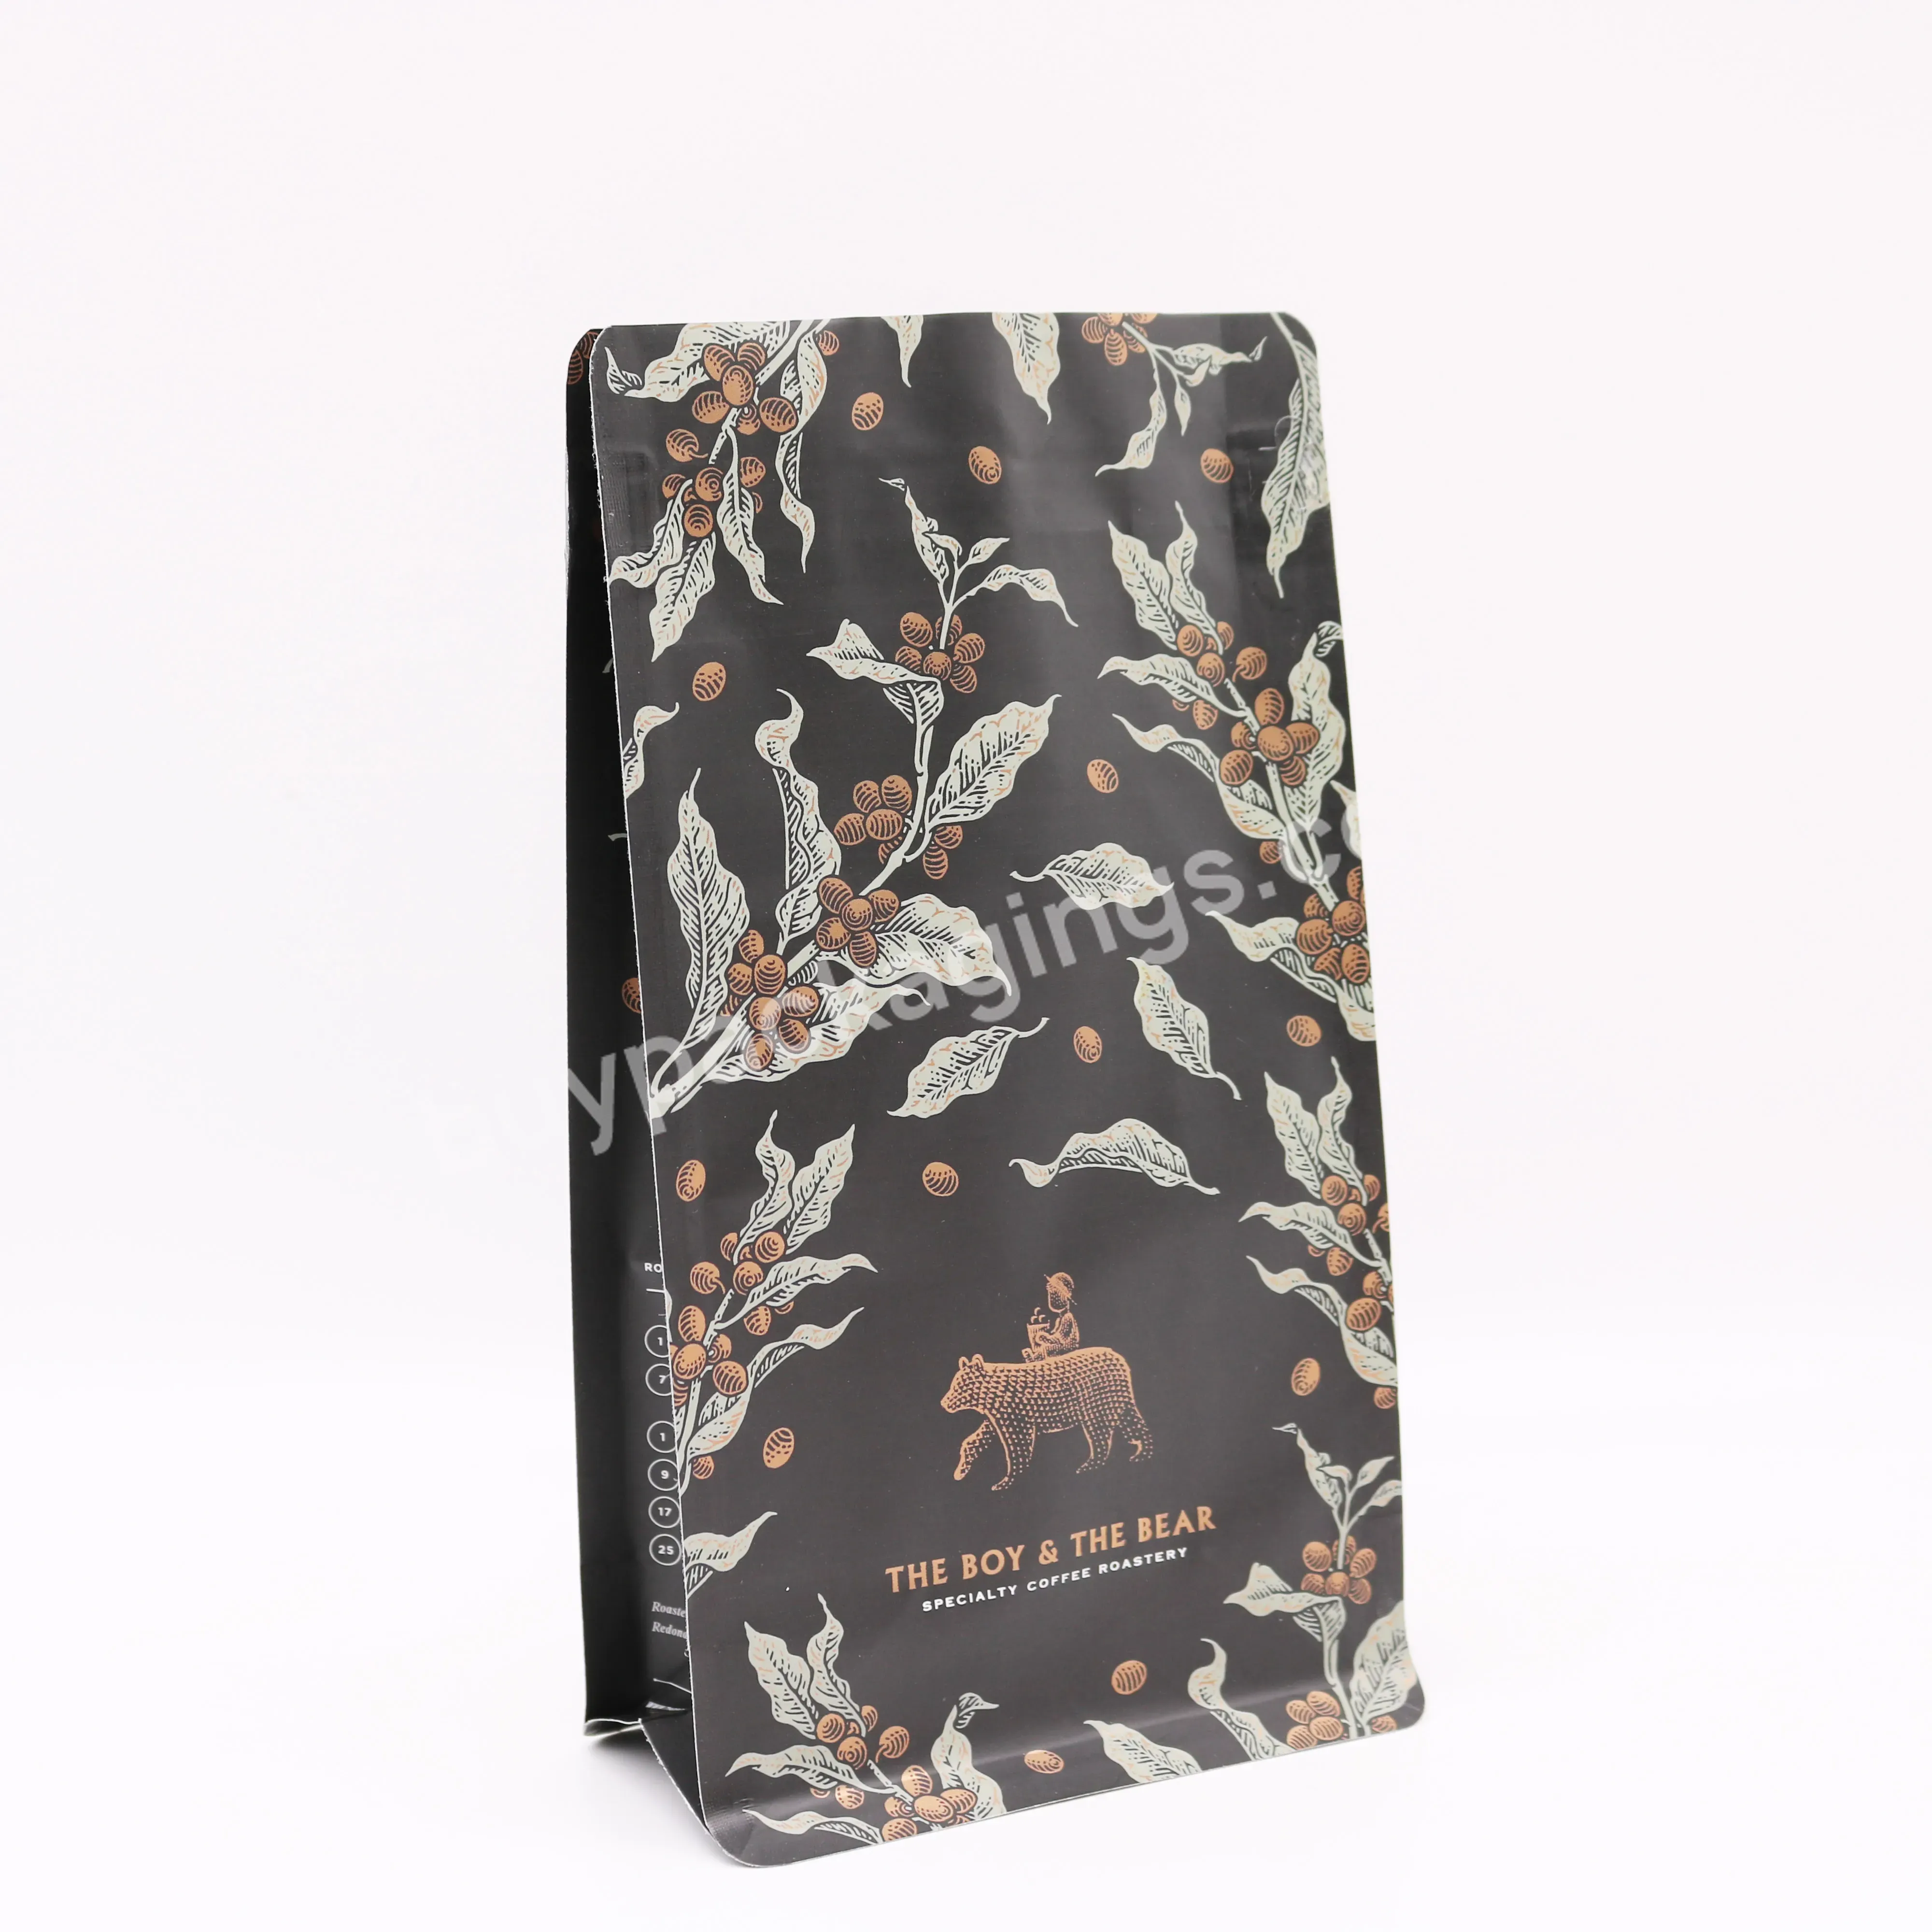 100g 250g 500g 1kg Custom Printed Flat Bottom Coffee Bag With Valve Zipper - Buy Flat Bottom Coffee Bag,Coffee Bag With Valve,Coffee Bag.